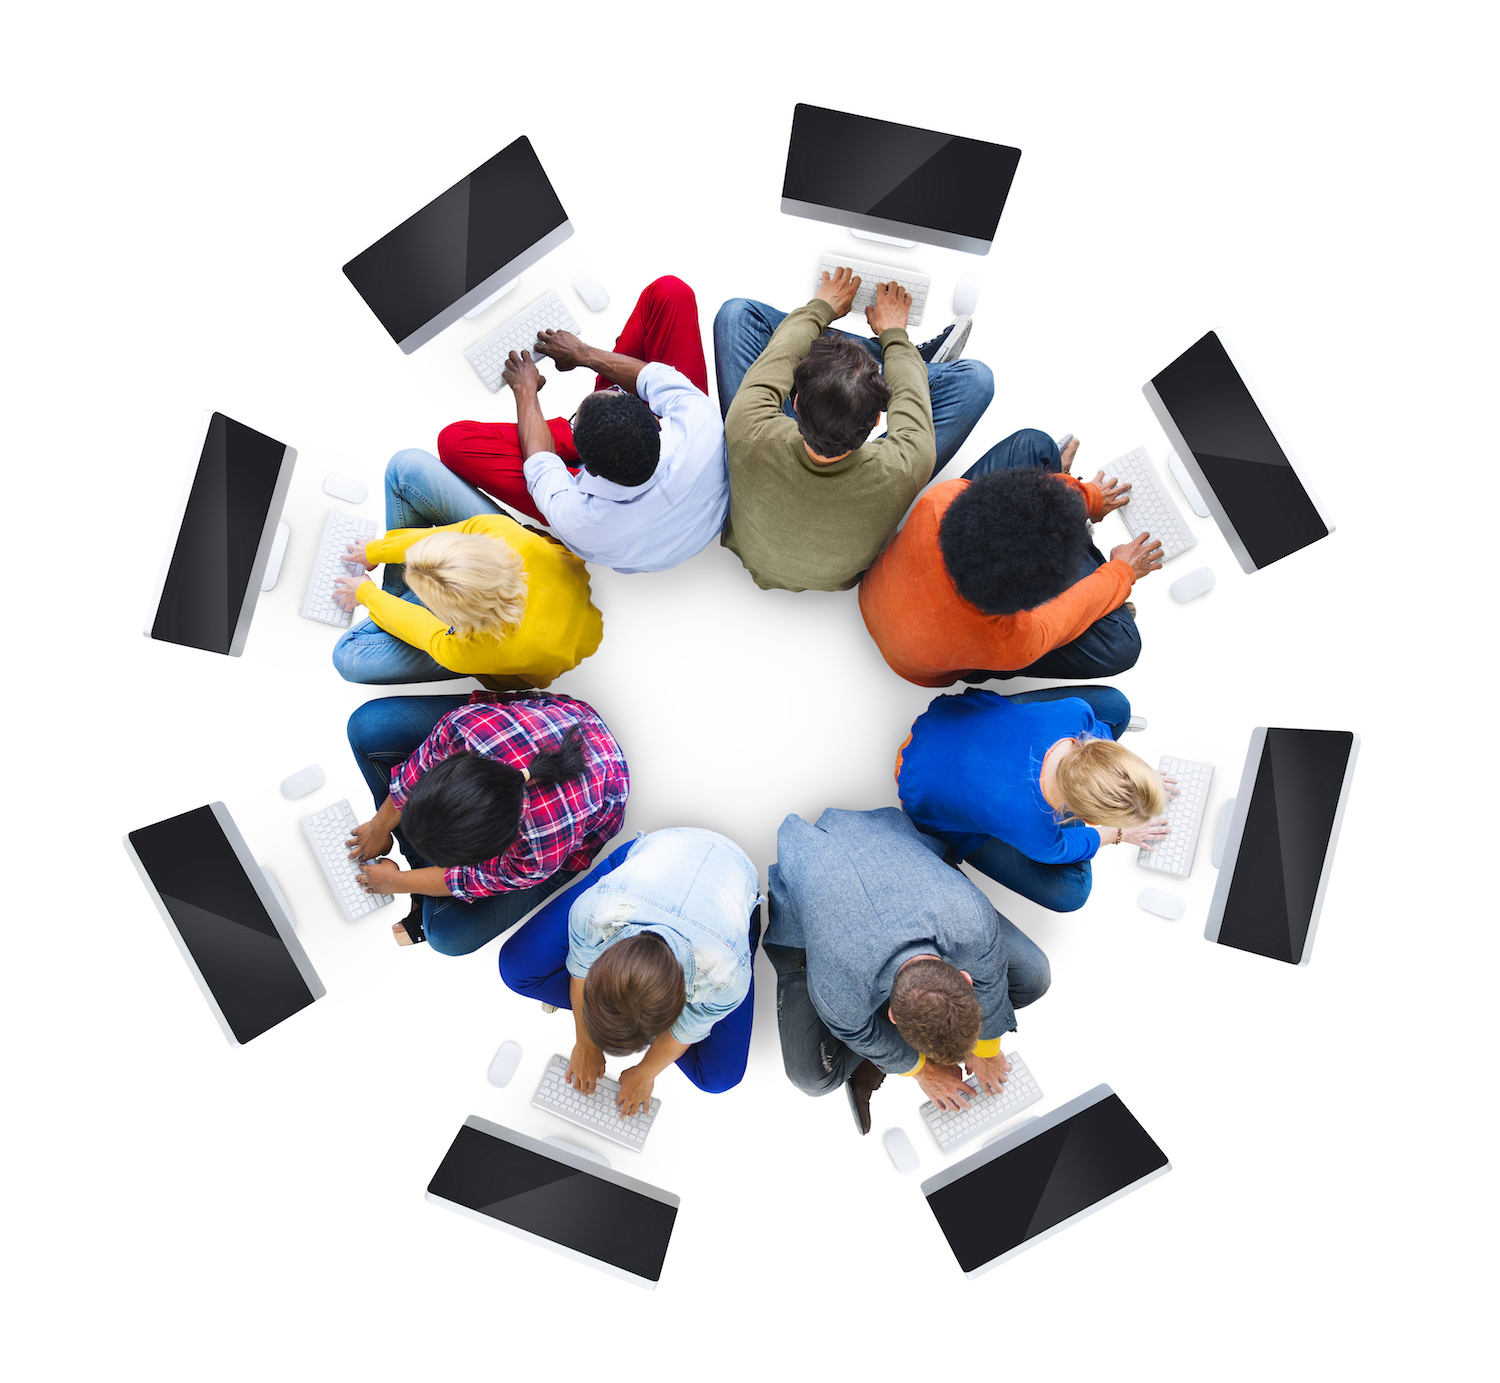 social media marketing team sitting in circle using computers